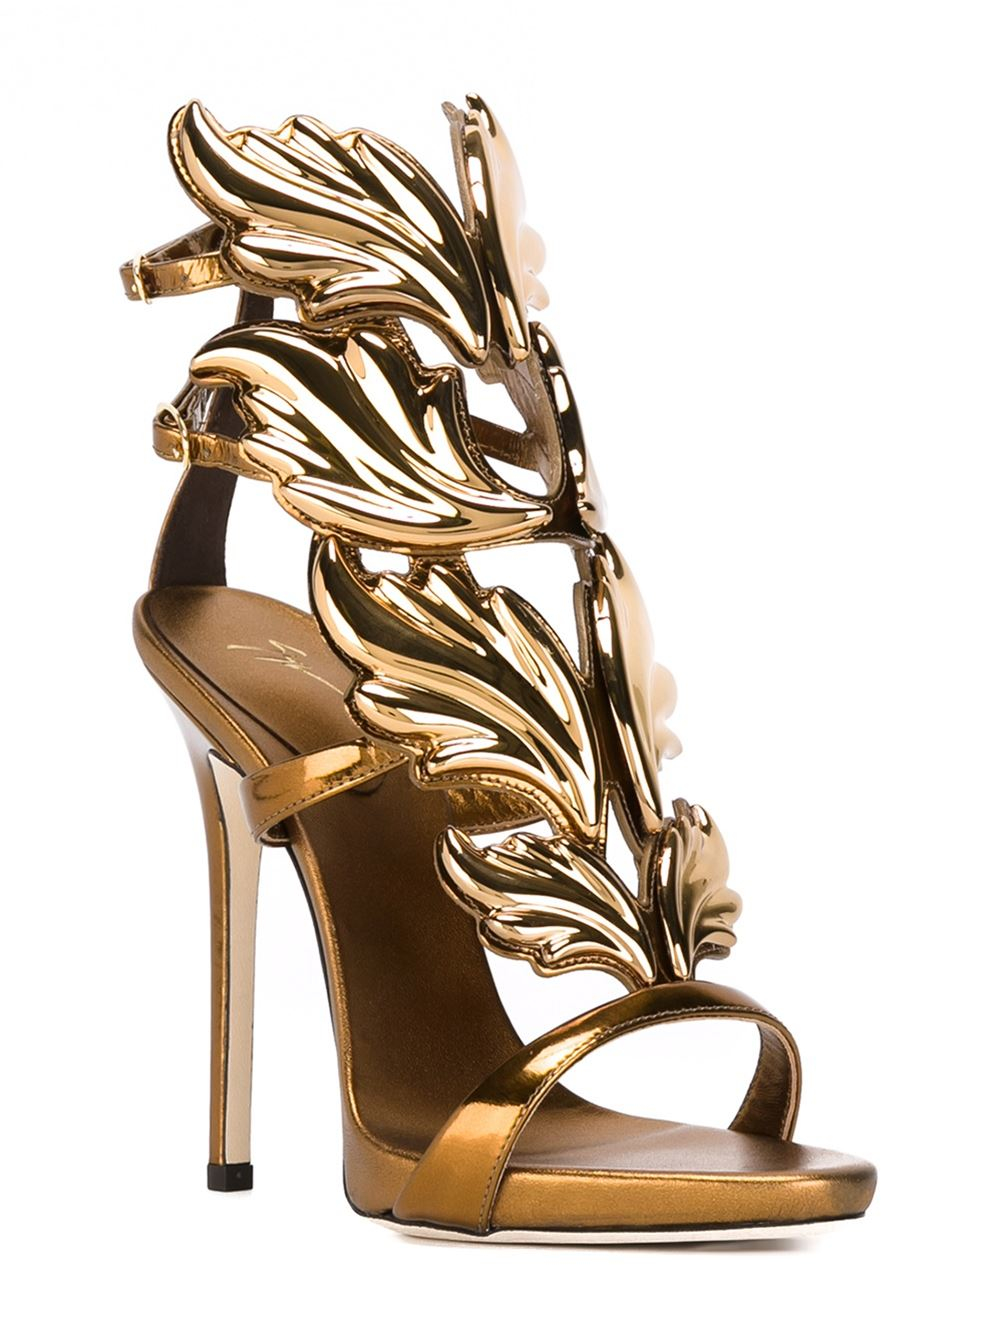 Giuseppe zanotti Leather Wings Sandals in Gold (metallic) | Lyst